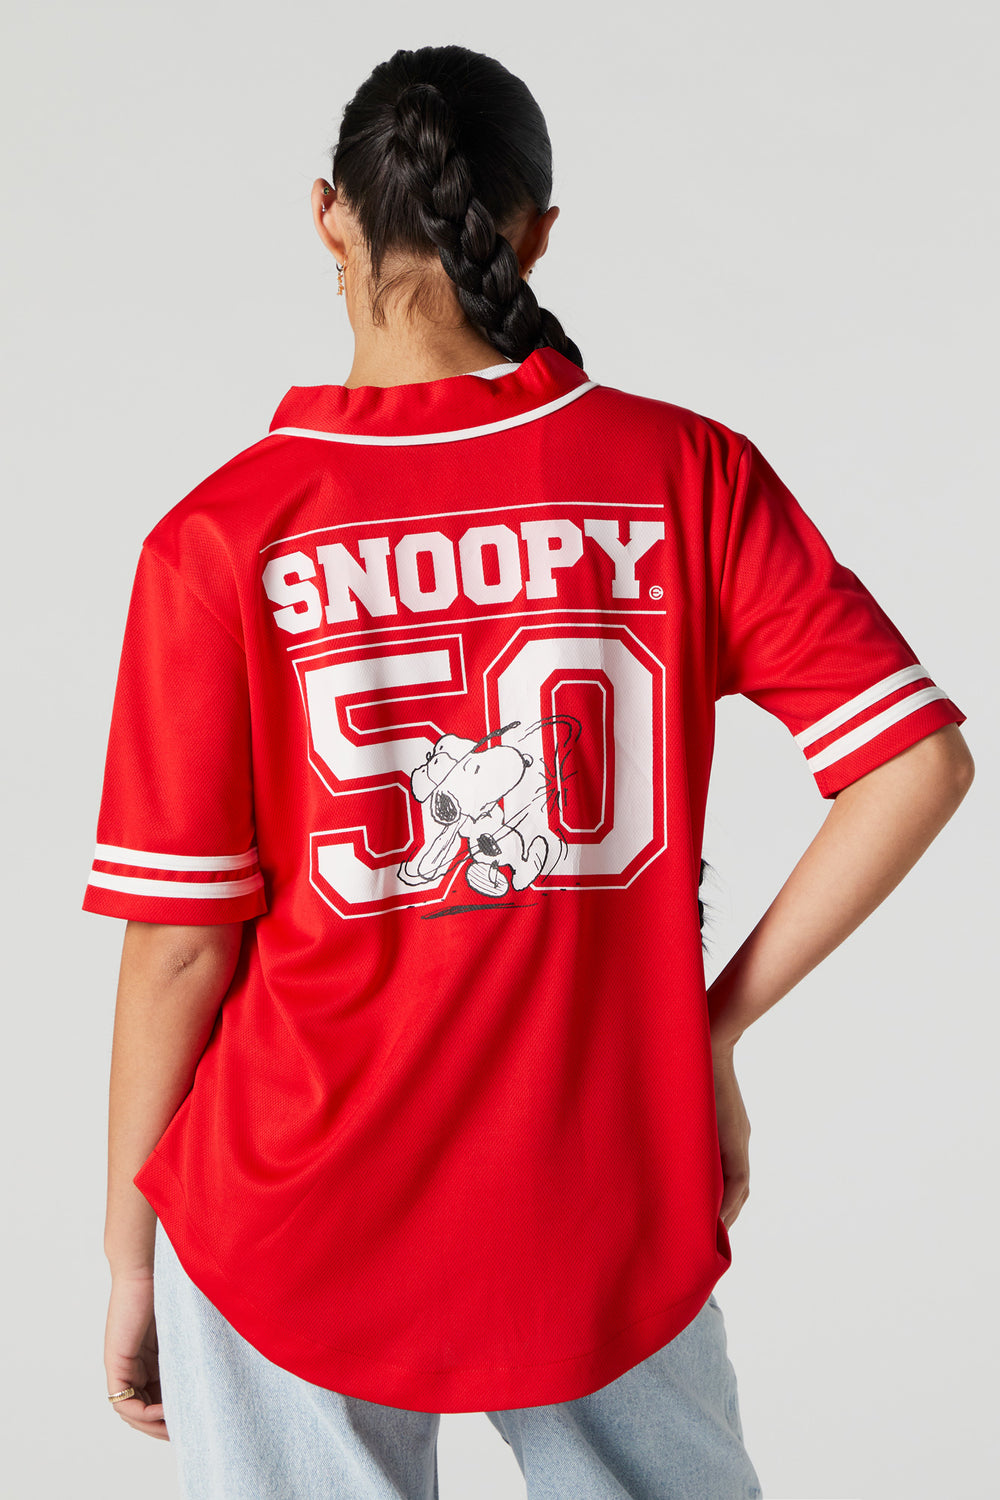 Snoopy Graphic Baseball Jersey Snoopy Graphic Baseball Jersey 4